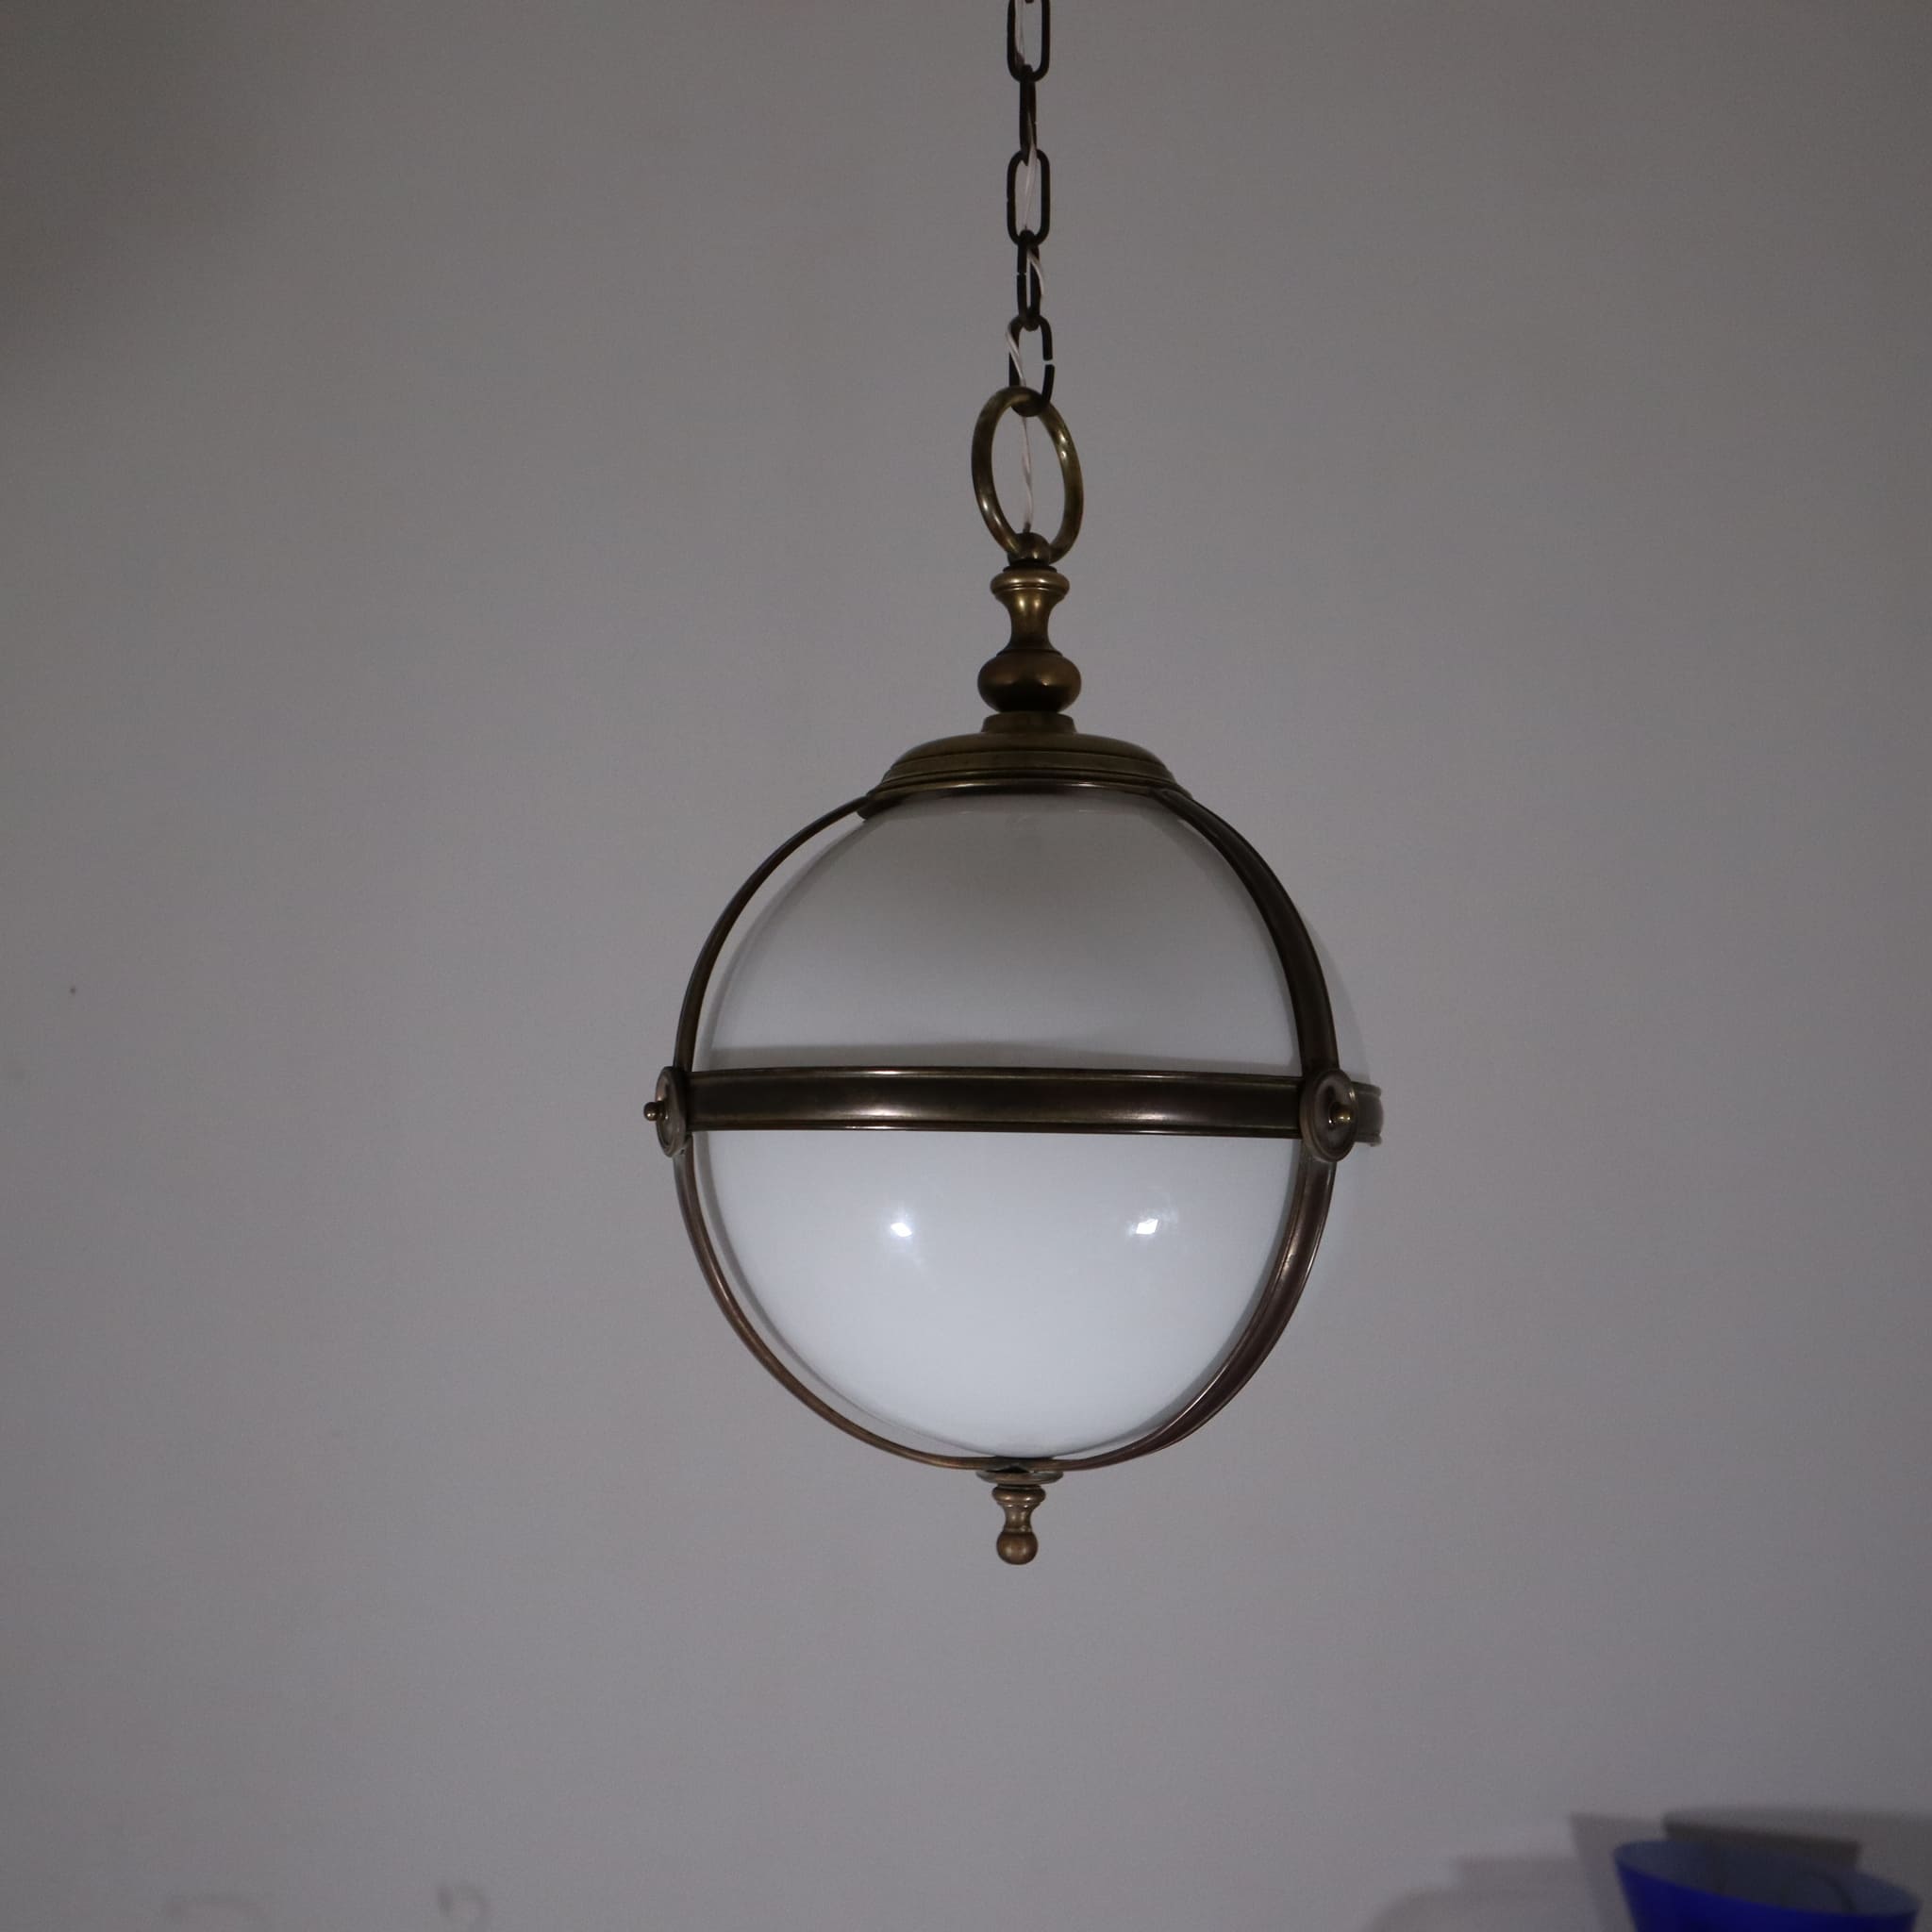 visionidepoca-visioni-depoca-chendelier-brass-ball-opaline-white-modern-vintage-design-made-italy-3